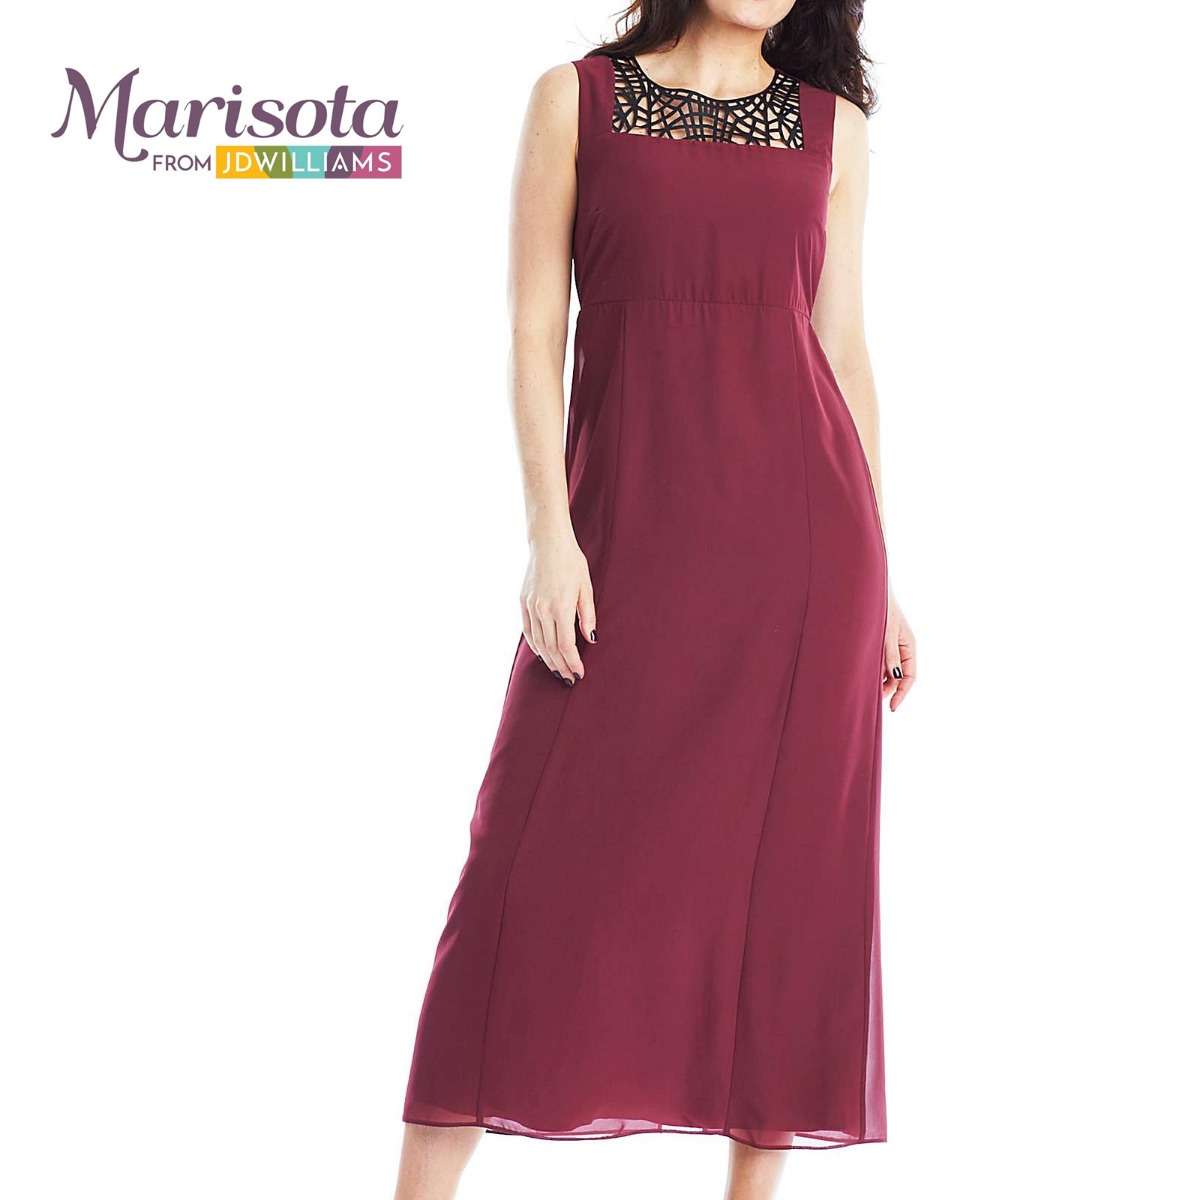 marisota dresses for wedding guests